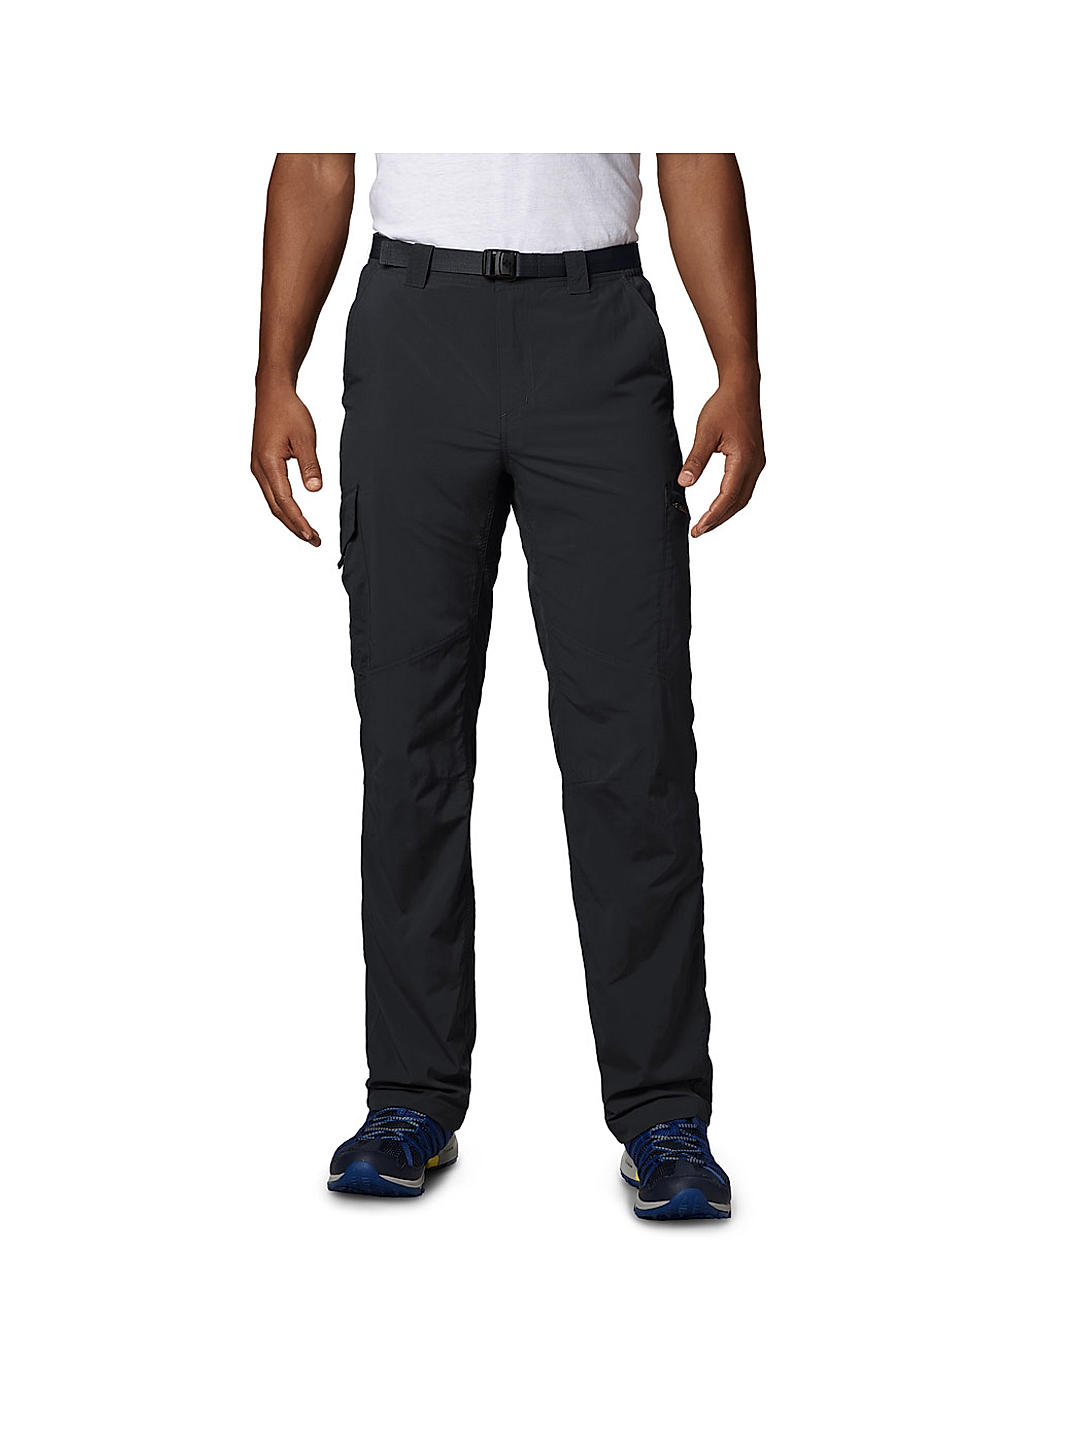 Buy Black Silver Ridge Cargo Pant for Men Online at Columbia Sportswear ...